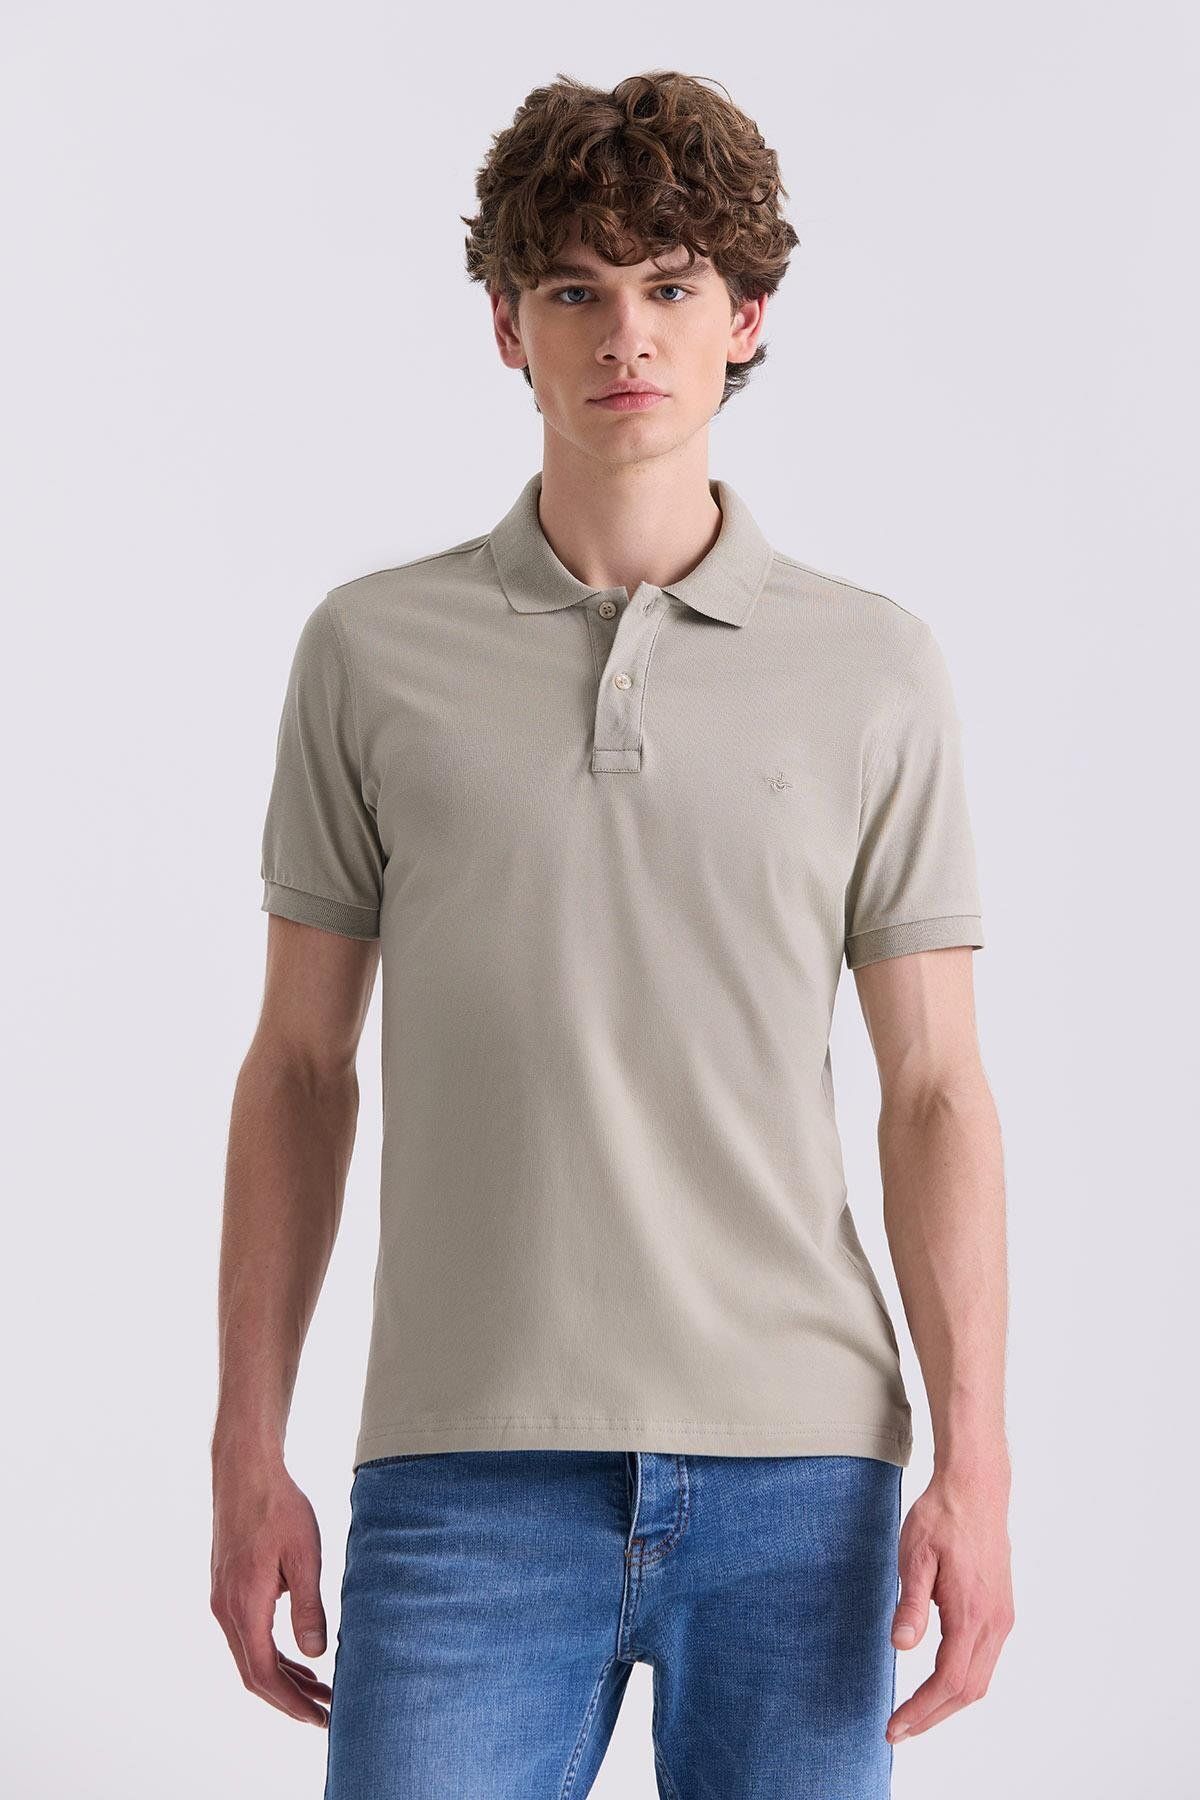 Jakamen Cağla Slim Fit Polo Yaka T-Shirt